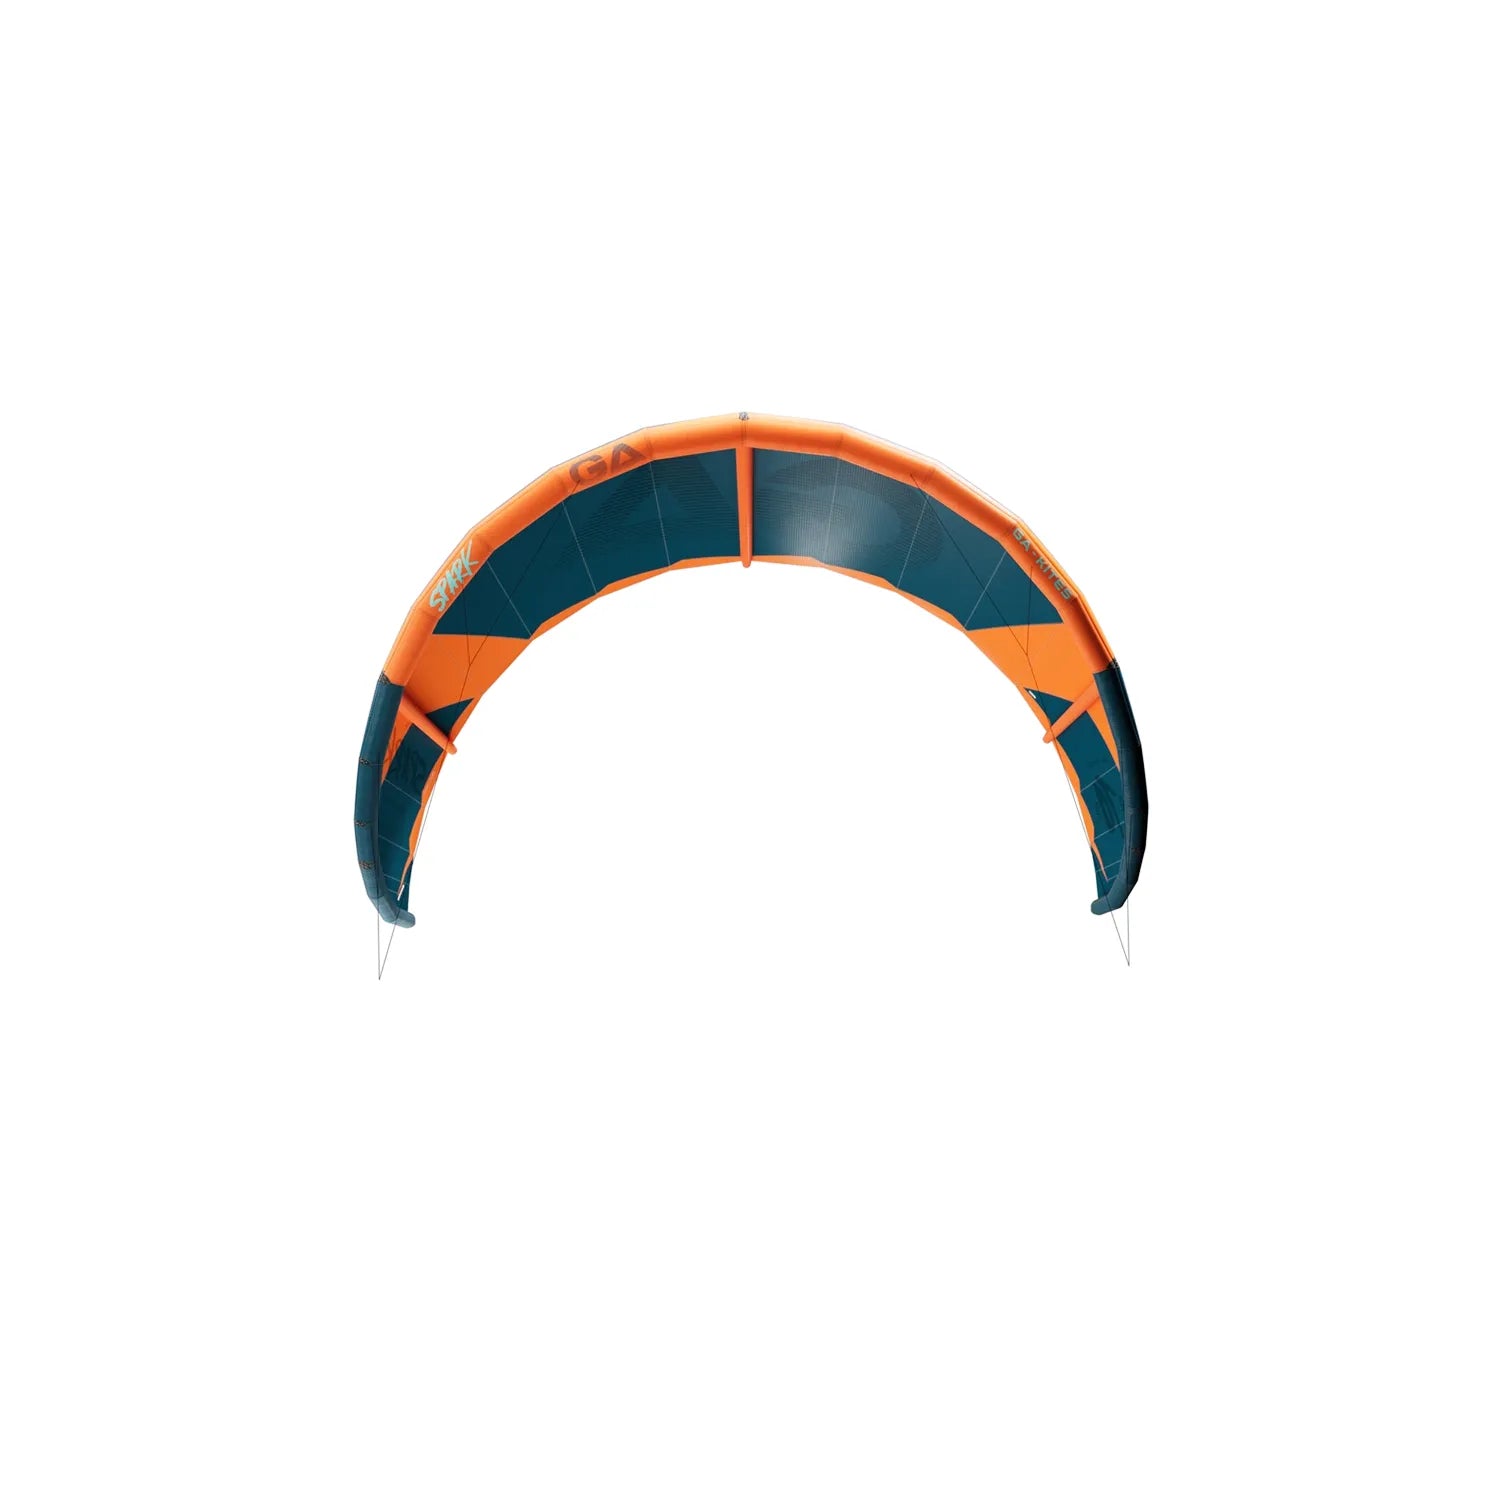 This image: GA-Kites 2024 Spark 15.0 LW C3 orange